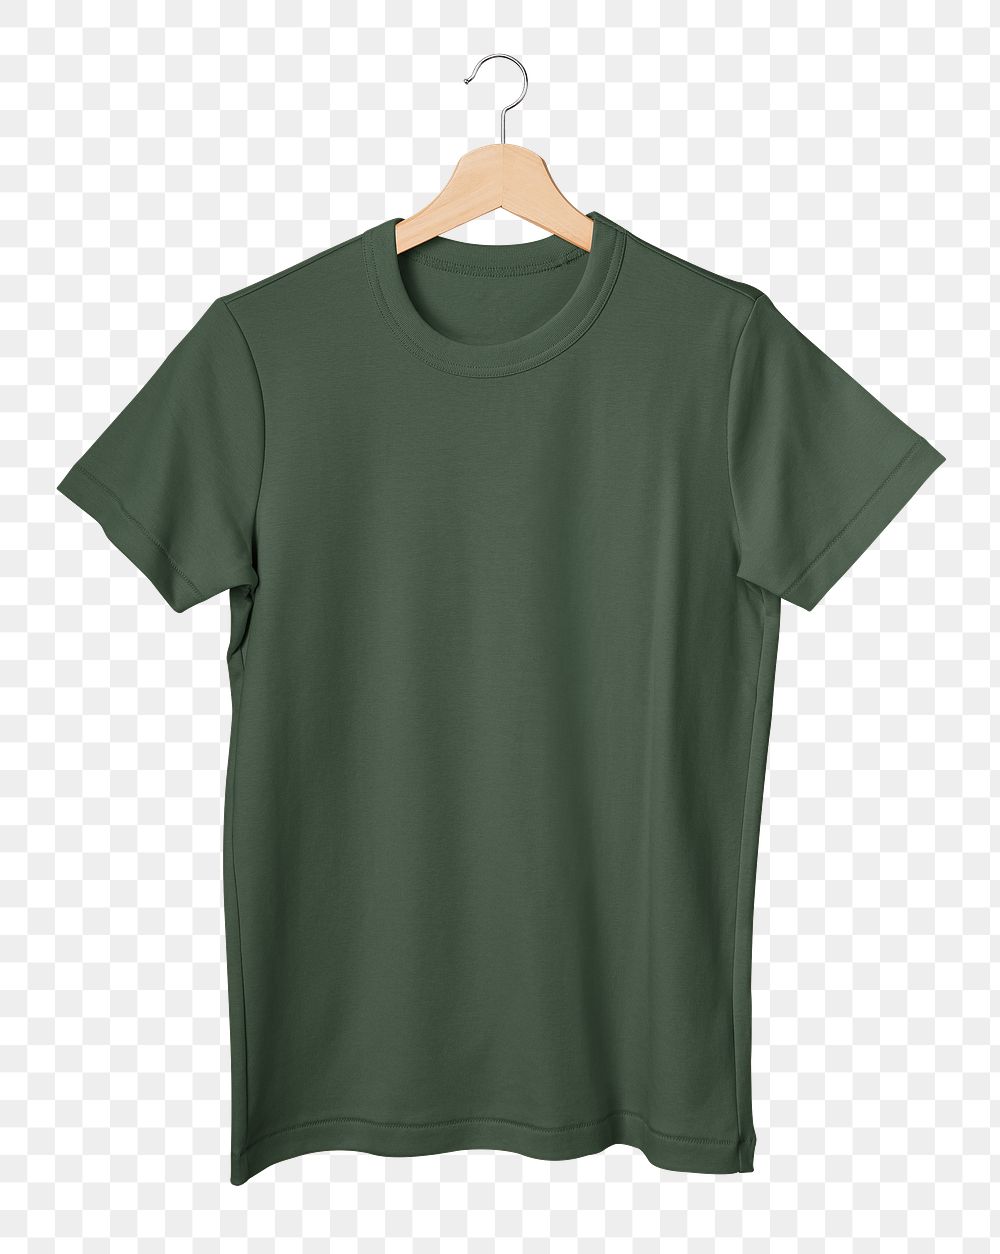 Green t-shirt png, simple unisex | Premium PNG Sticker - rawpixel